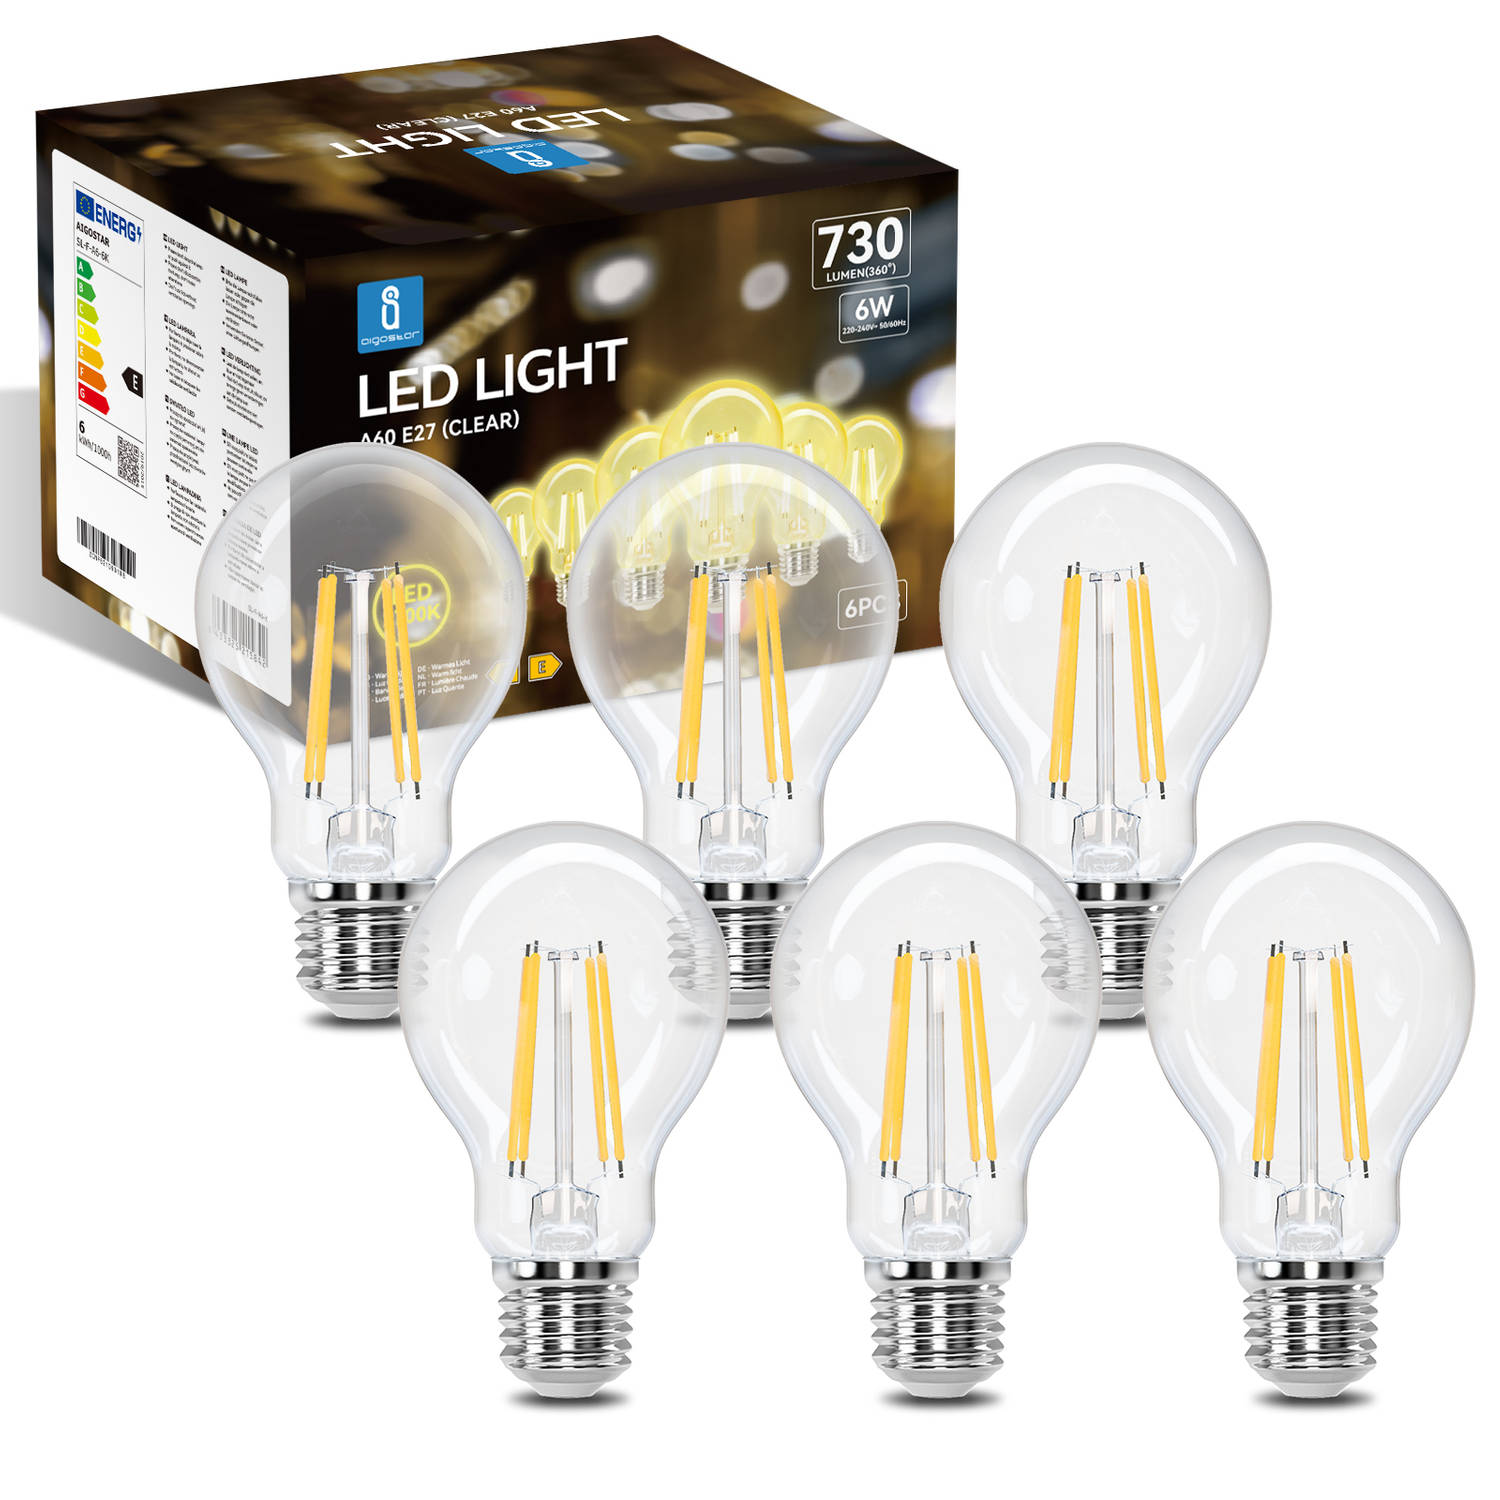 Aigostar 10zcm Filament Lamp Led Lichtbron E27 6w 2700k 730lm Set Van 6 Stuks